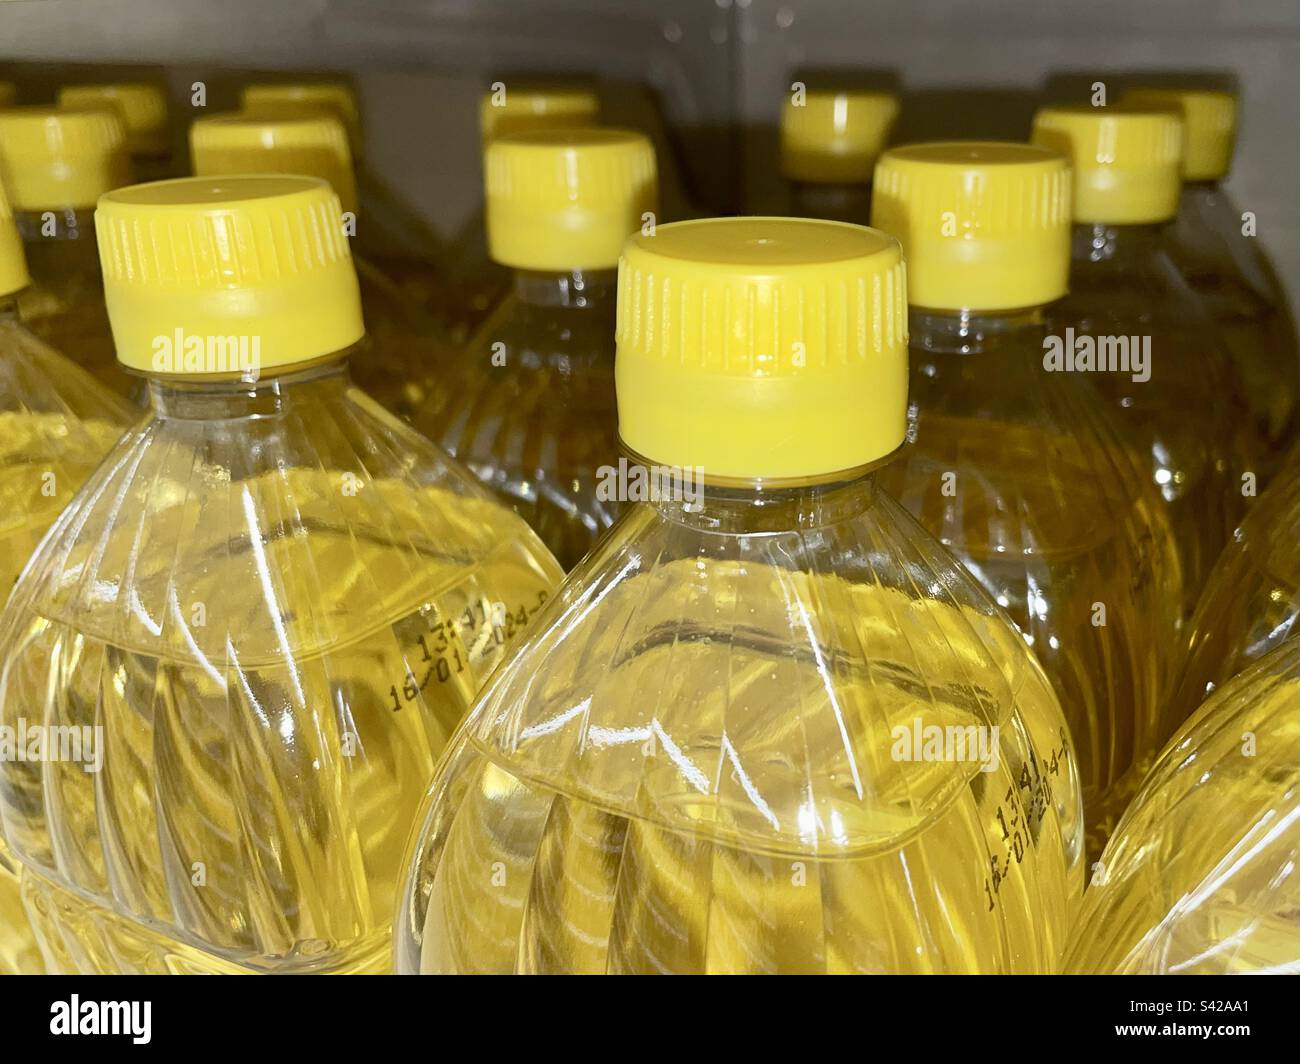 Yellow caps plastic bottles of yellow seed oil on market shelf Stock Photo